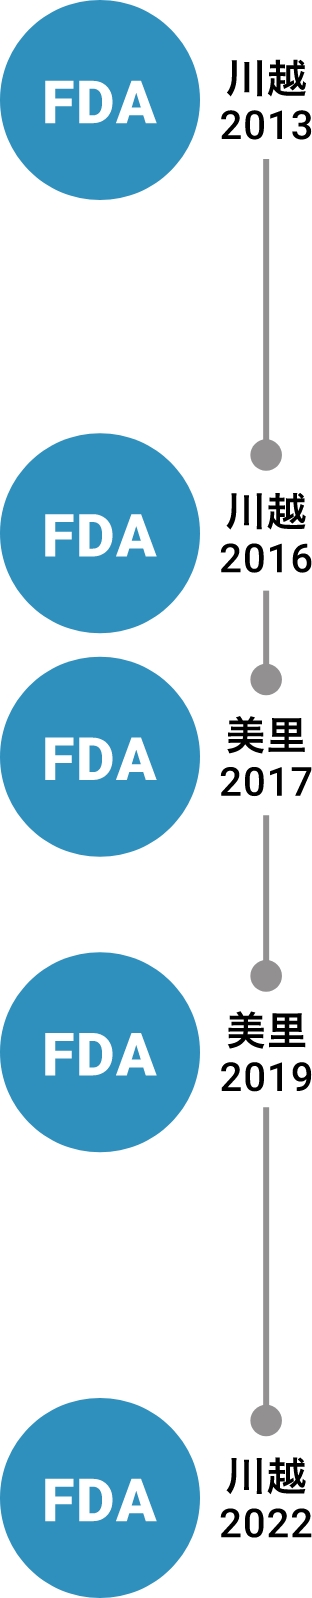 PDA 川越2013 FDA 川越2016 FDA 川越2017 FDA 美里2019 FDA 美里 2022